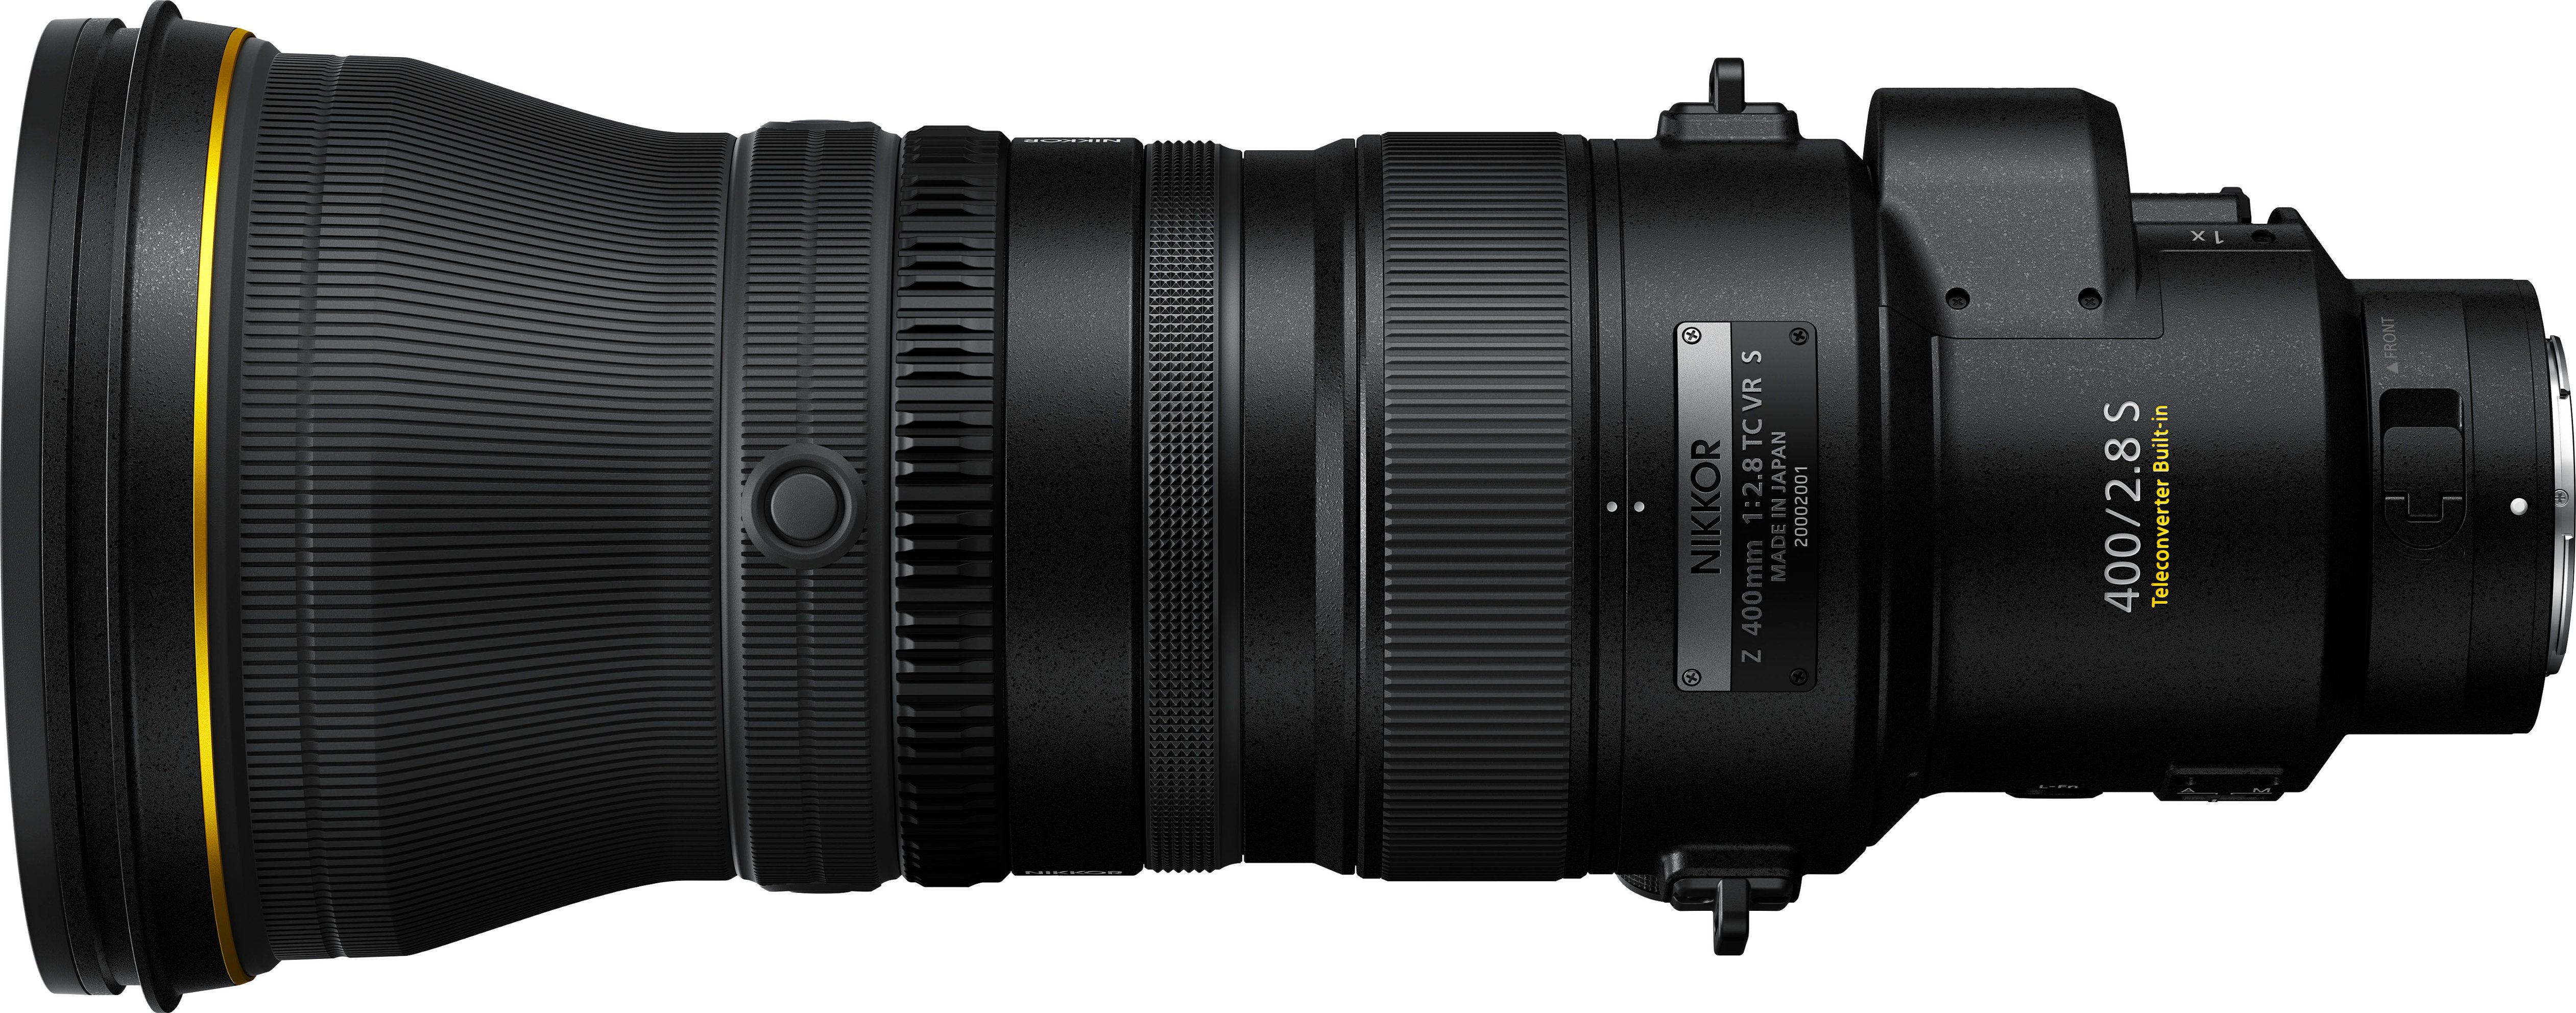 Left View: Nikon - AF-S NIKKOR 120-300mm f/2.8 E FL ED SR VR Telephoto Zoom Lens - Black